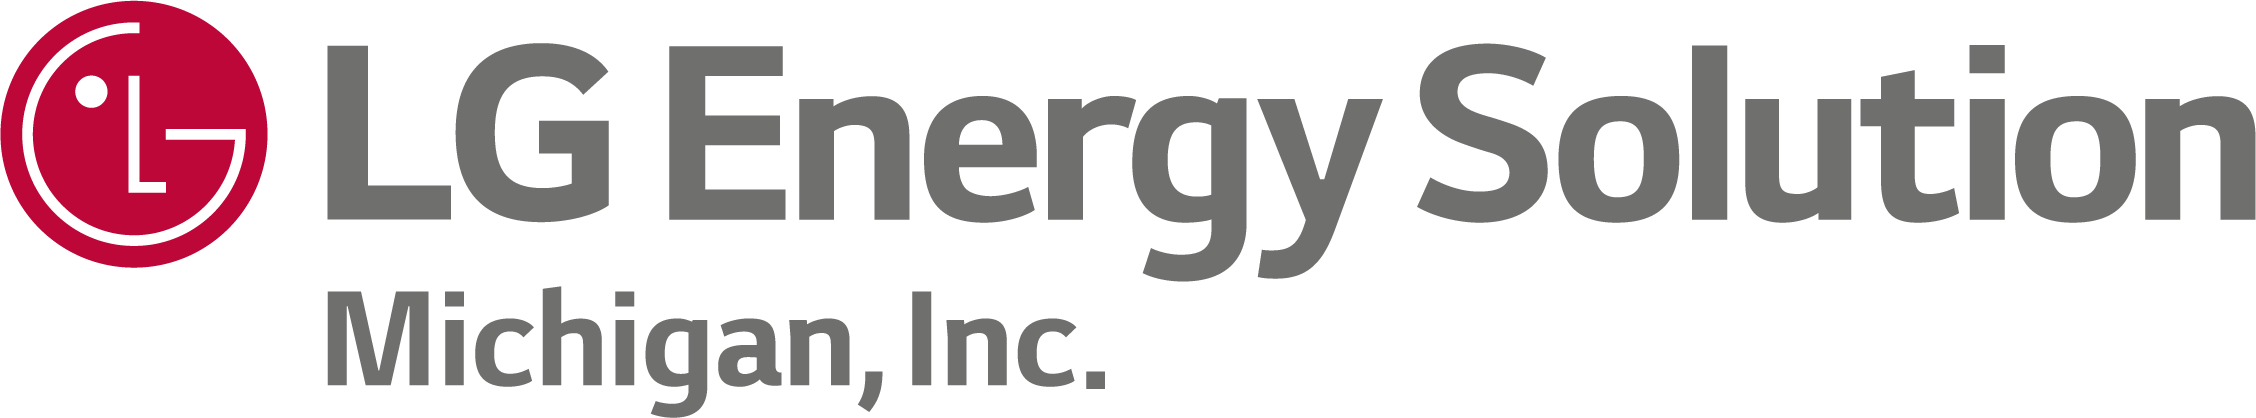 LG Energy Solution Michigan, Inc. 